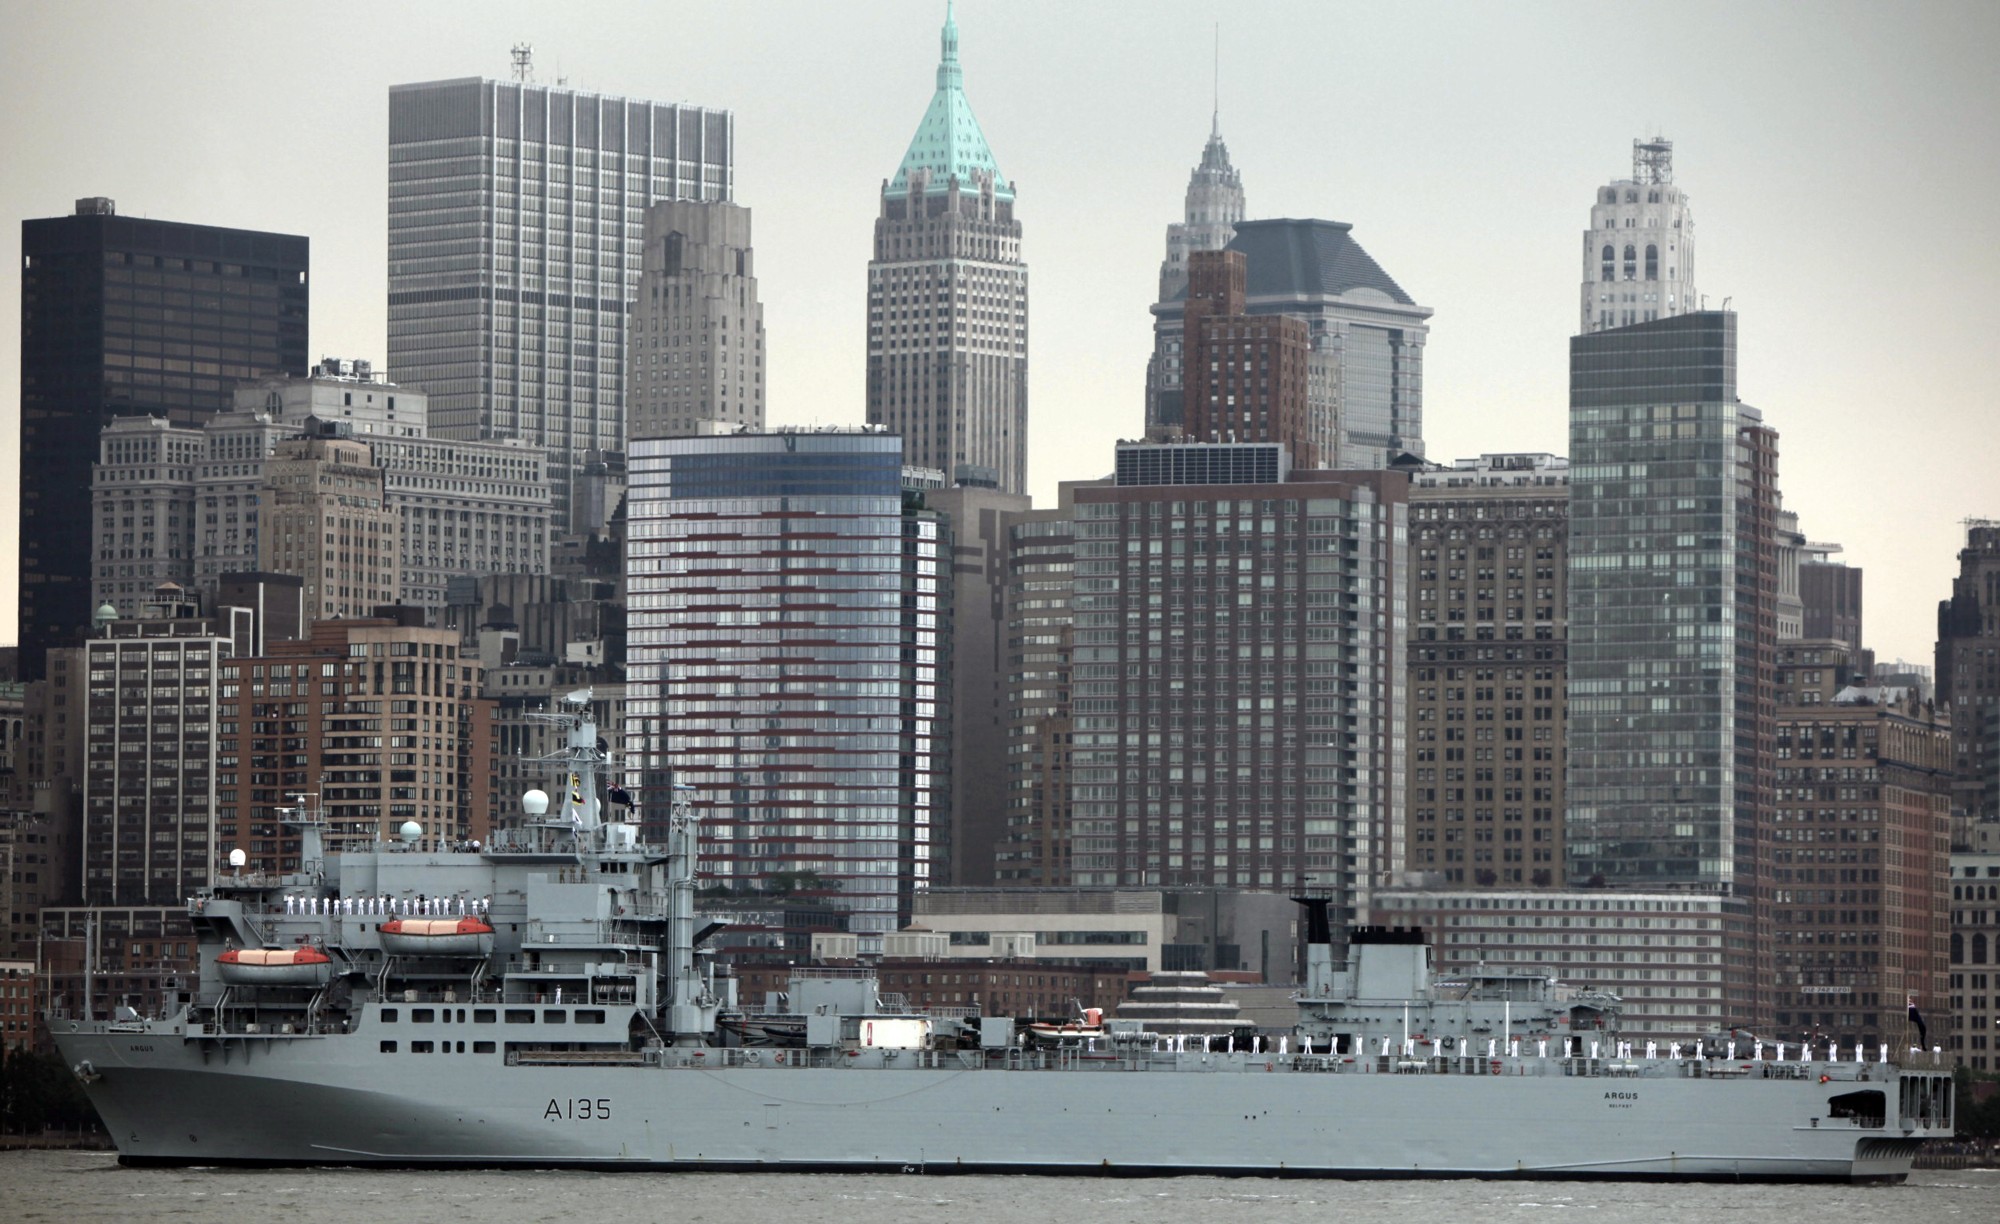 a 135 rfa argus casualty receiving ship support royal fleet auxilary navy 46 new york